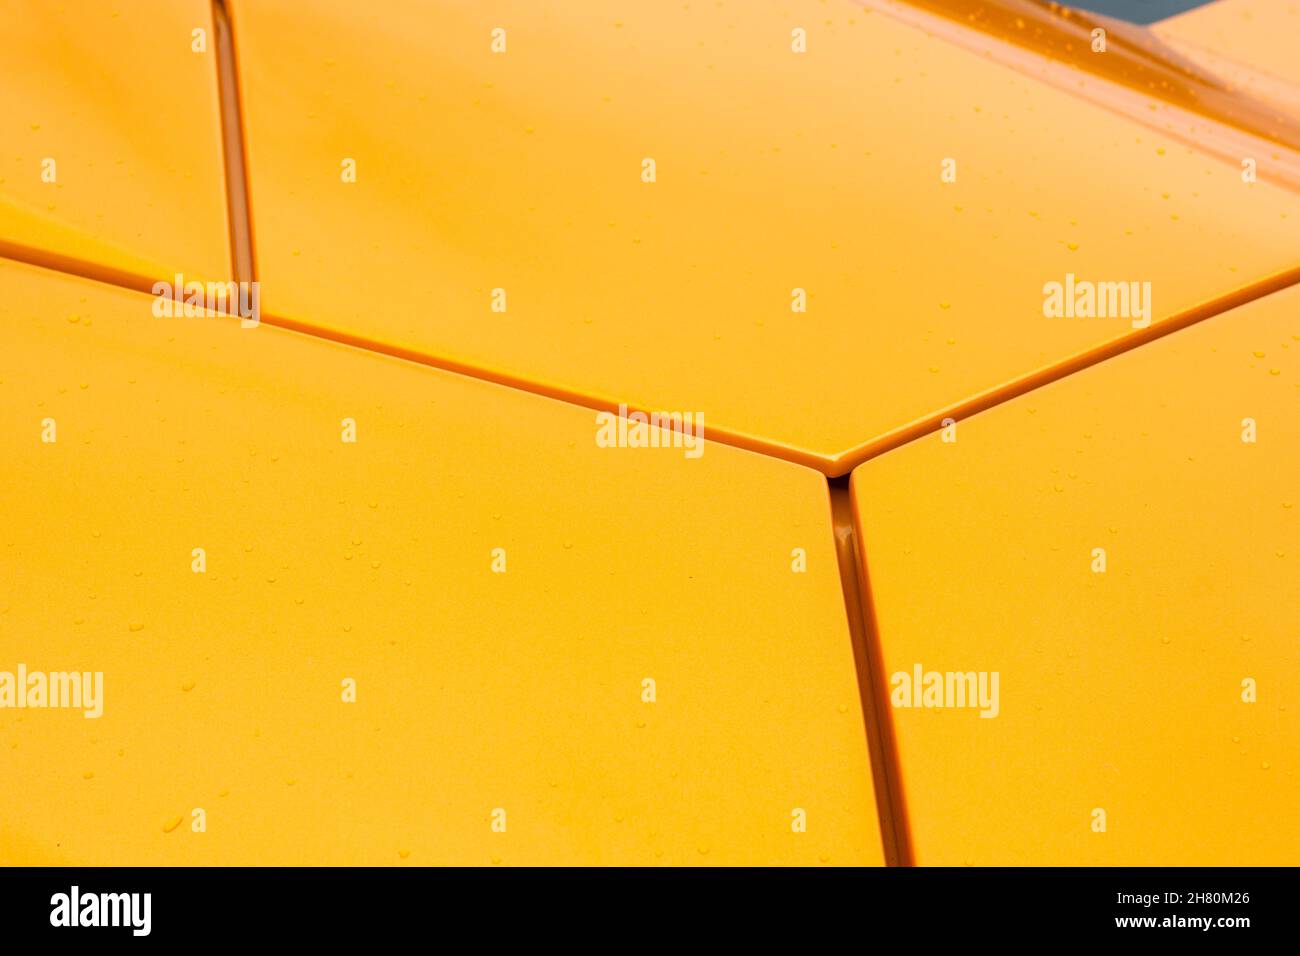 Close up detail of bodywork on an orange Lamborghini Aventador S sports car Stock Photo